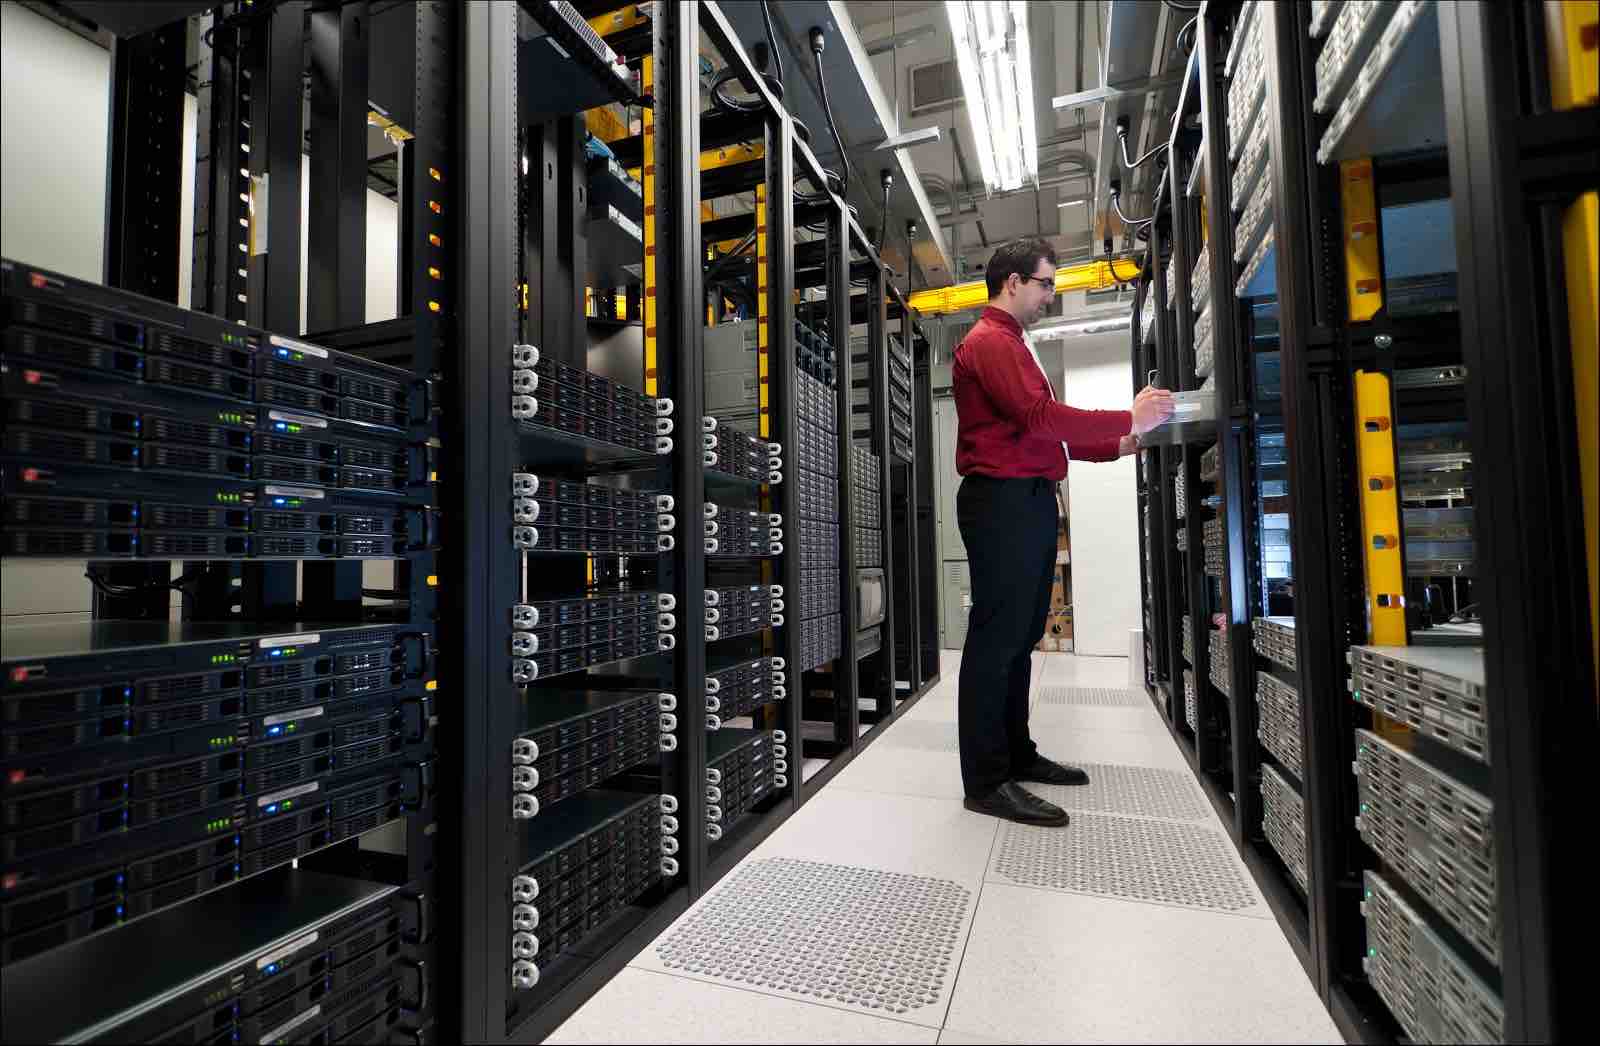 Data Center of Tier 2 (Redundant capacity components)